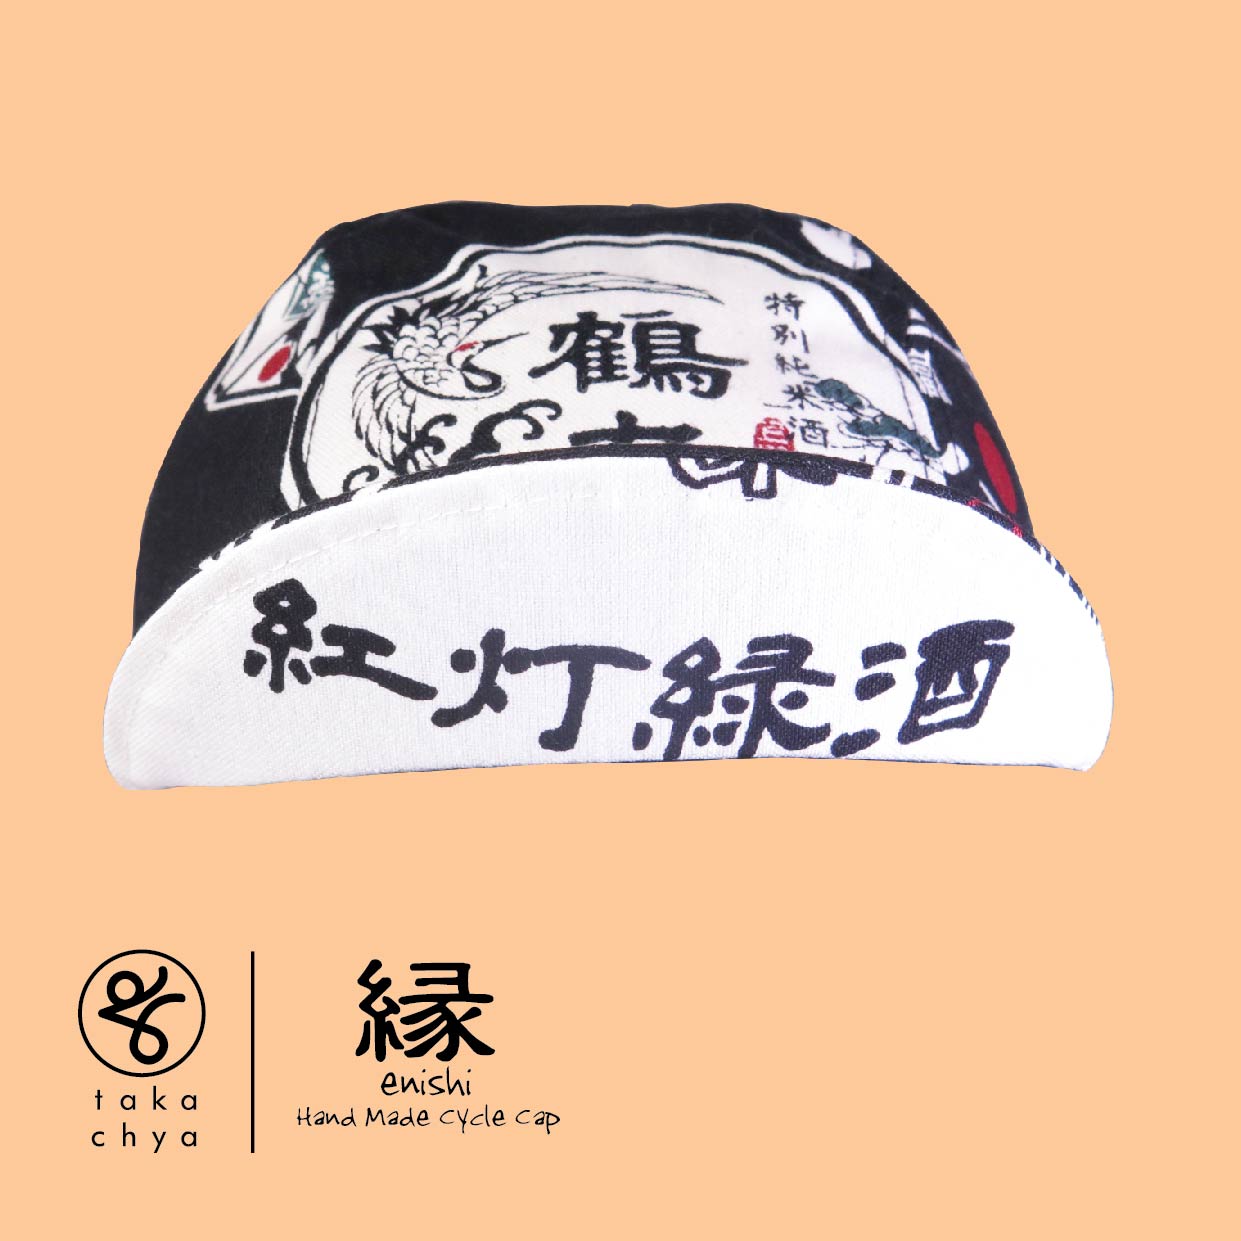 ENISHI 日本酒物語・黒 / NIHONSYU MONOGATARI・BLACK HANDMADE CYCLING CAP